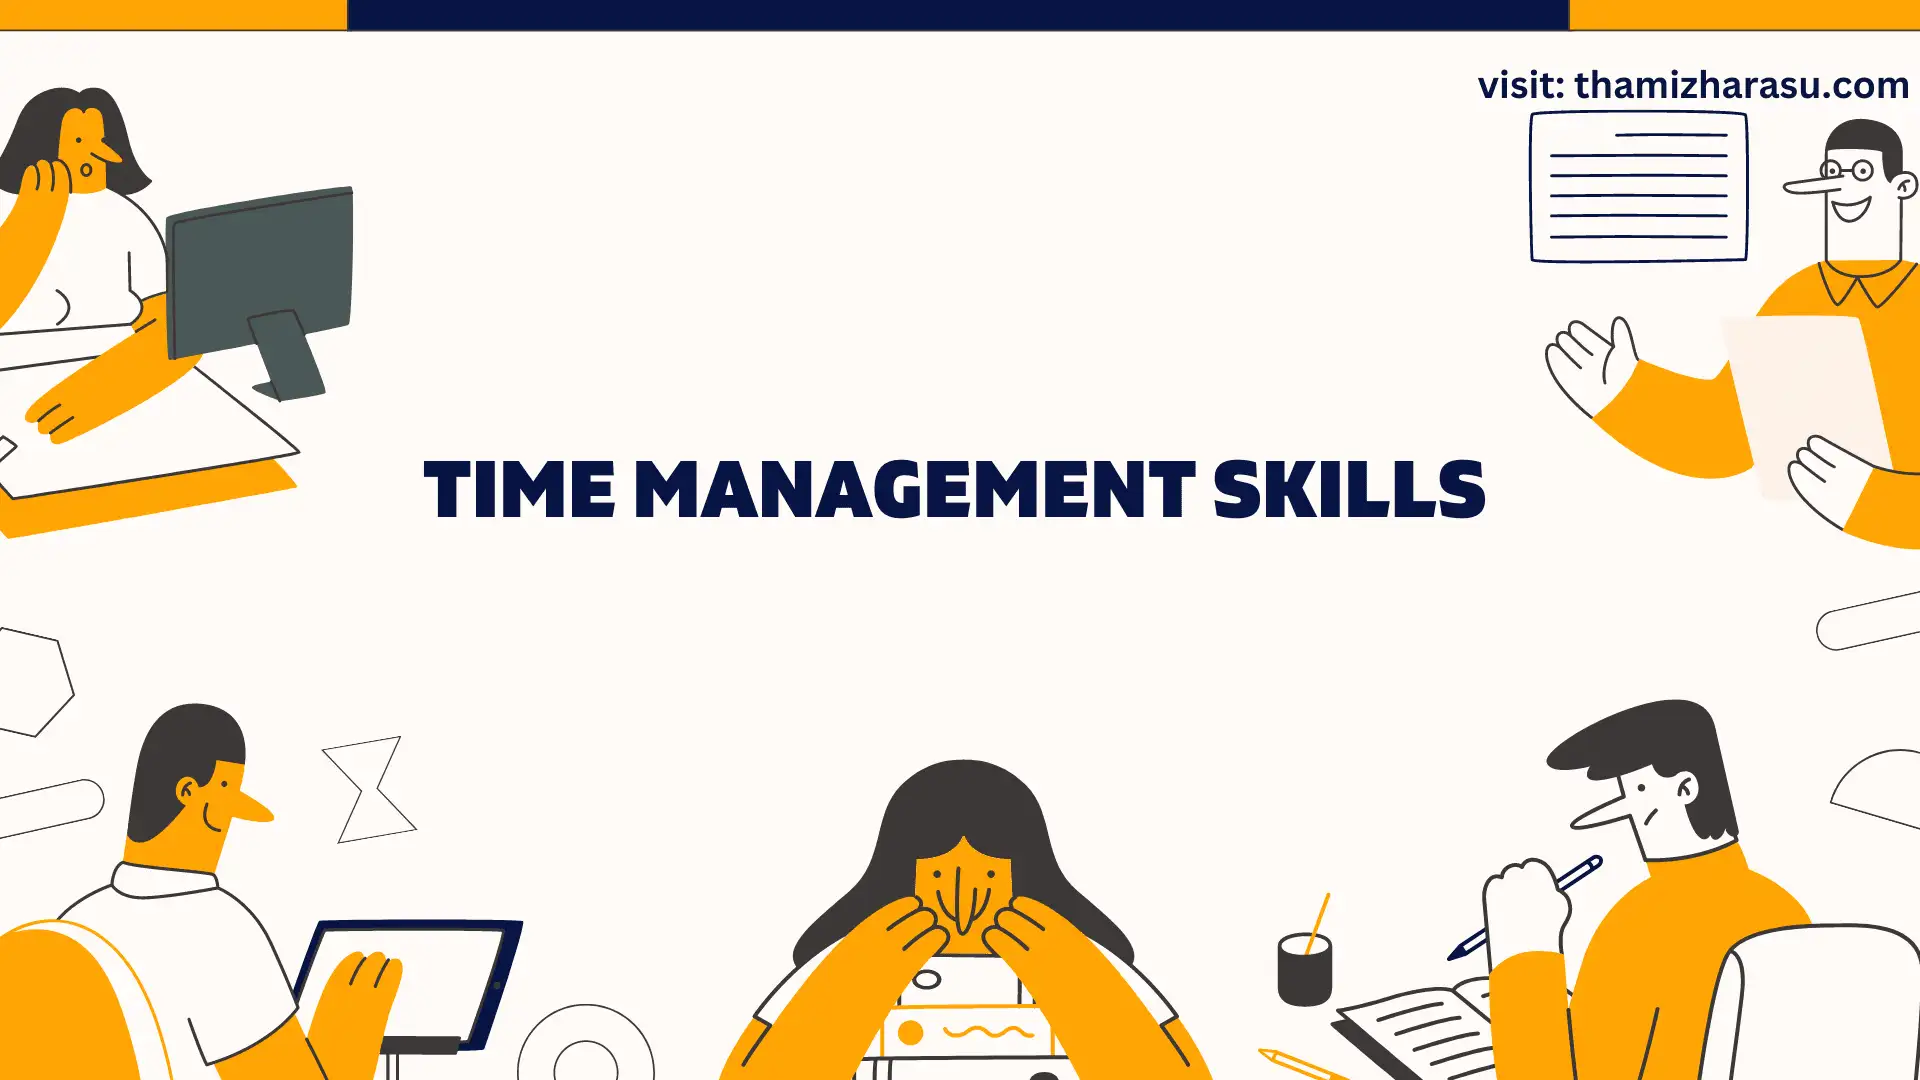 Time management skills